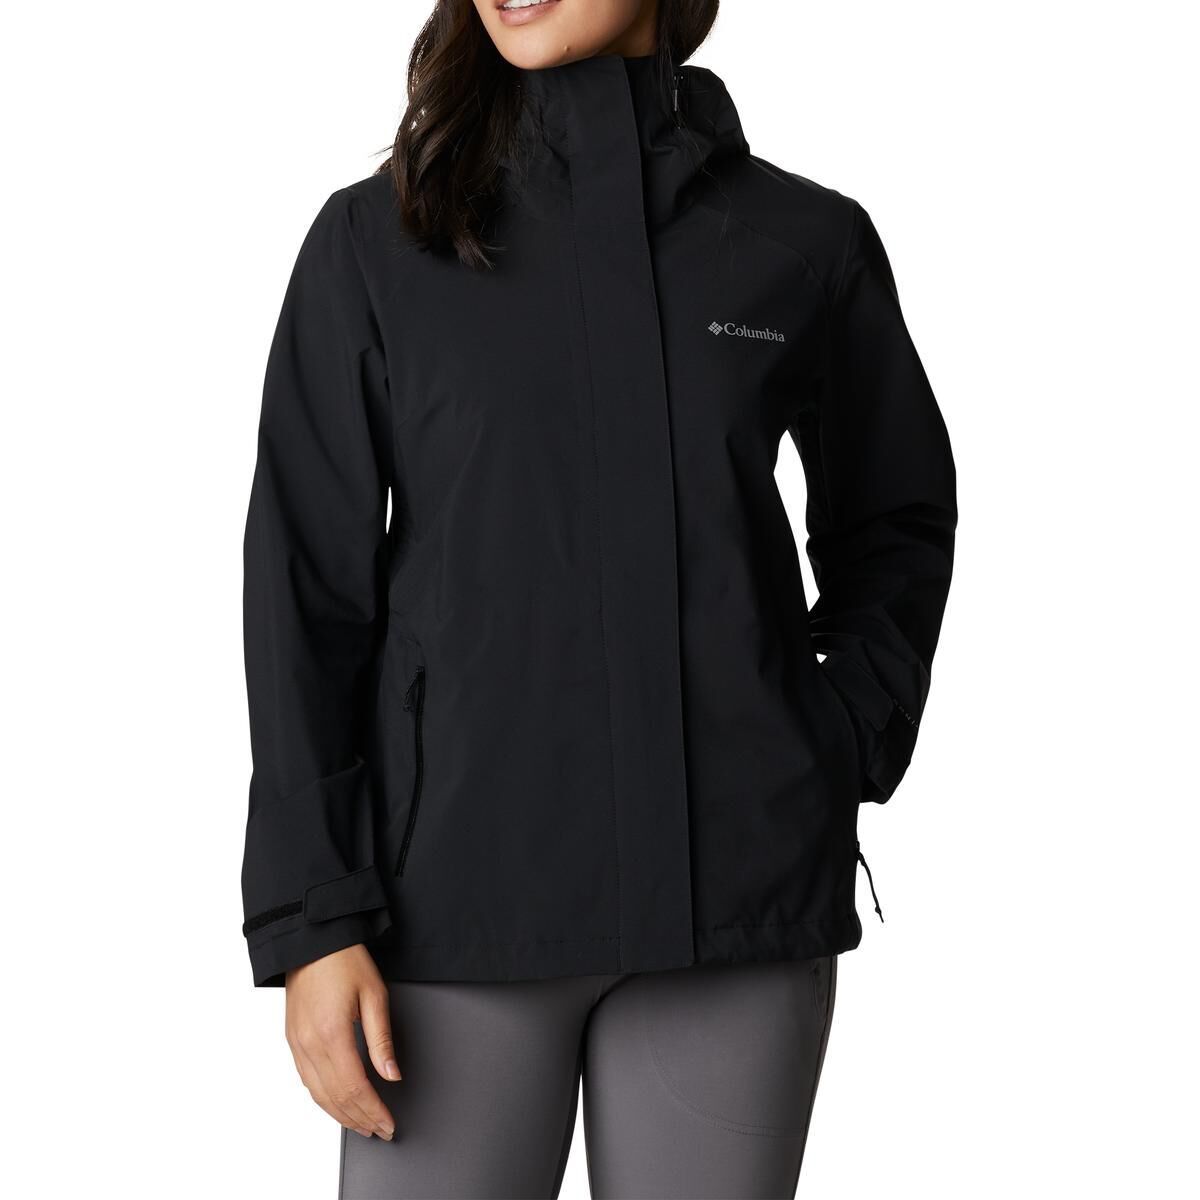 Columbia Earth Explorer™ Shell - Waterproof jacket - Women's